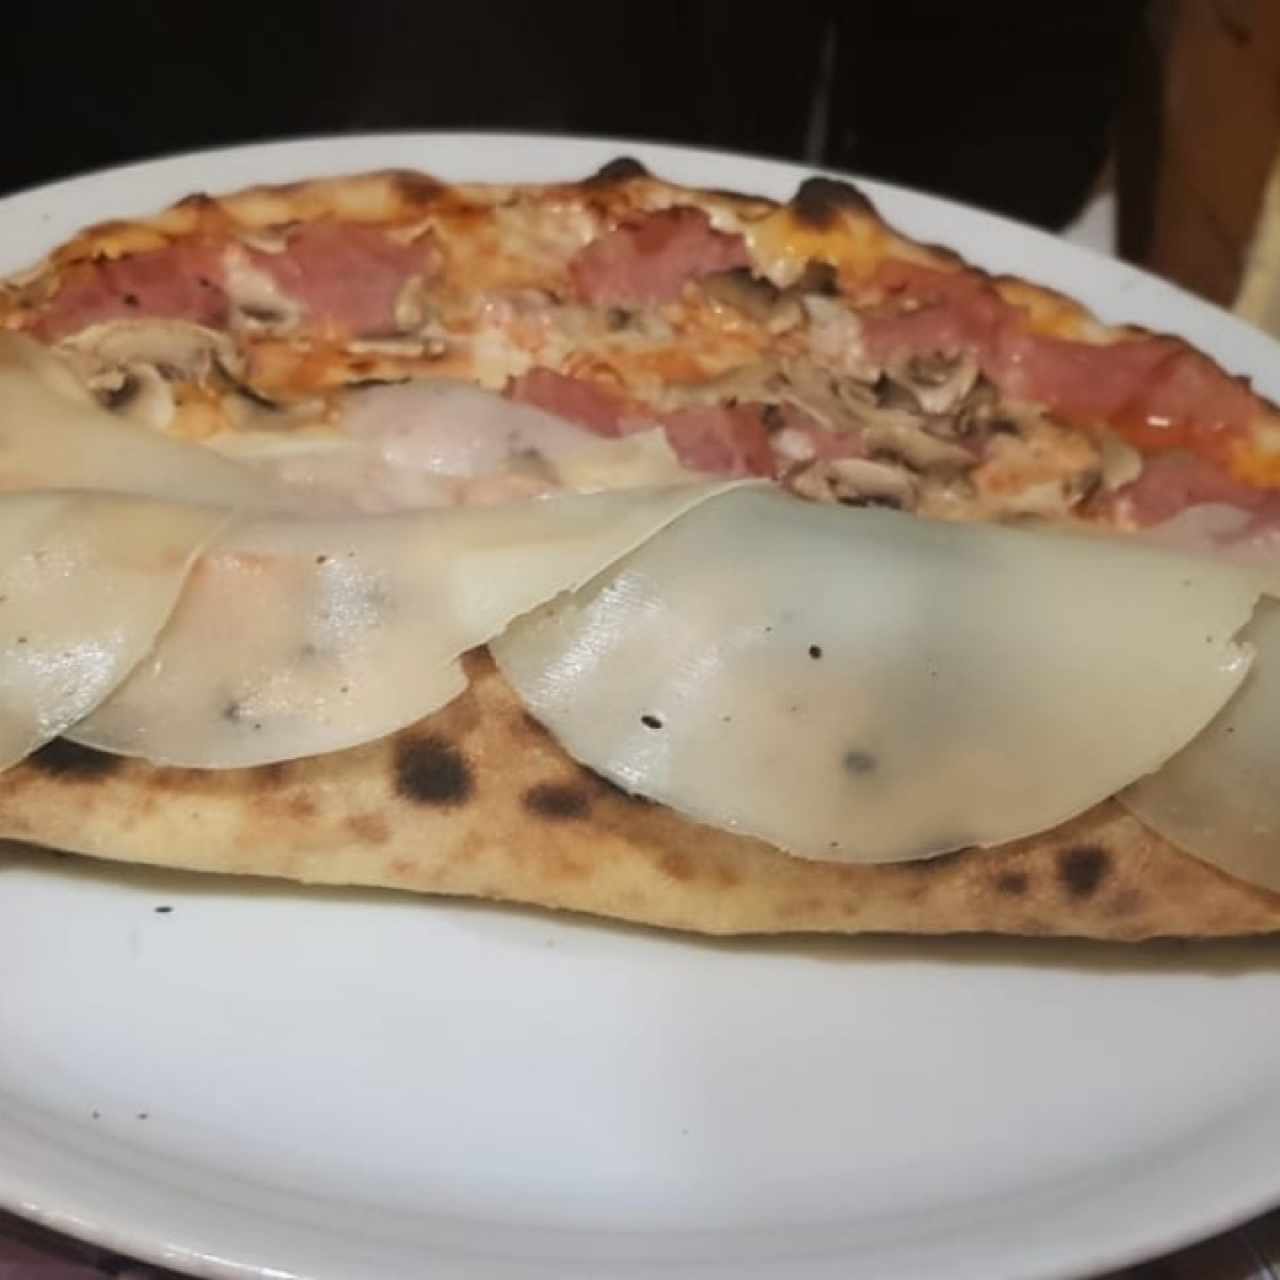 Papa Gajo(media pizza y media calzone) normal